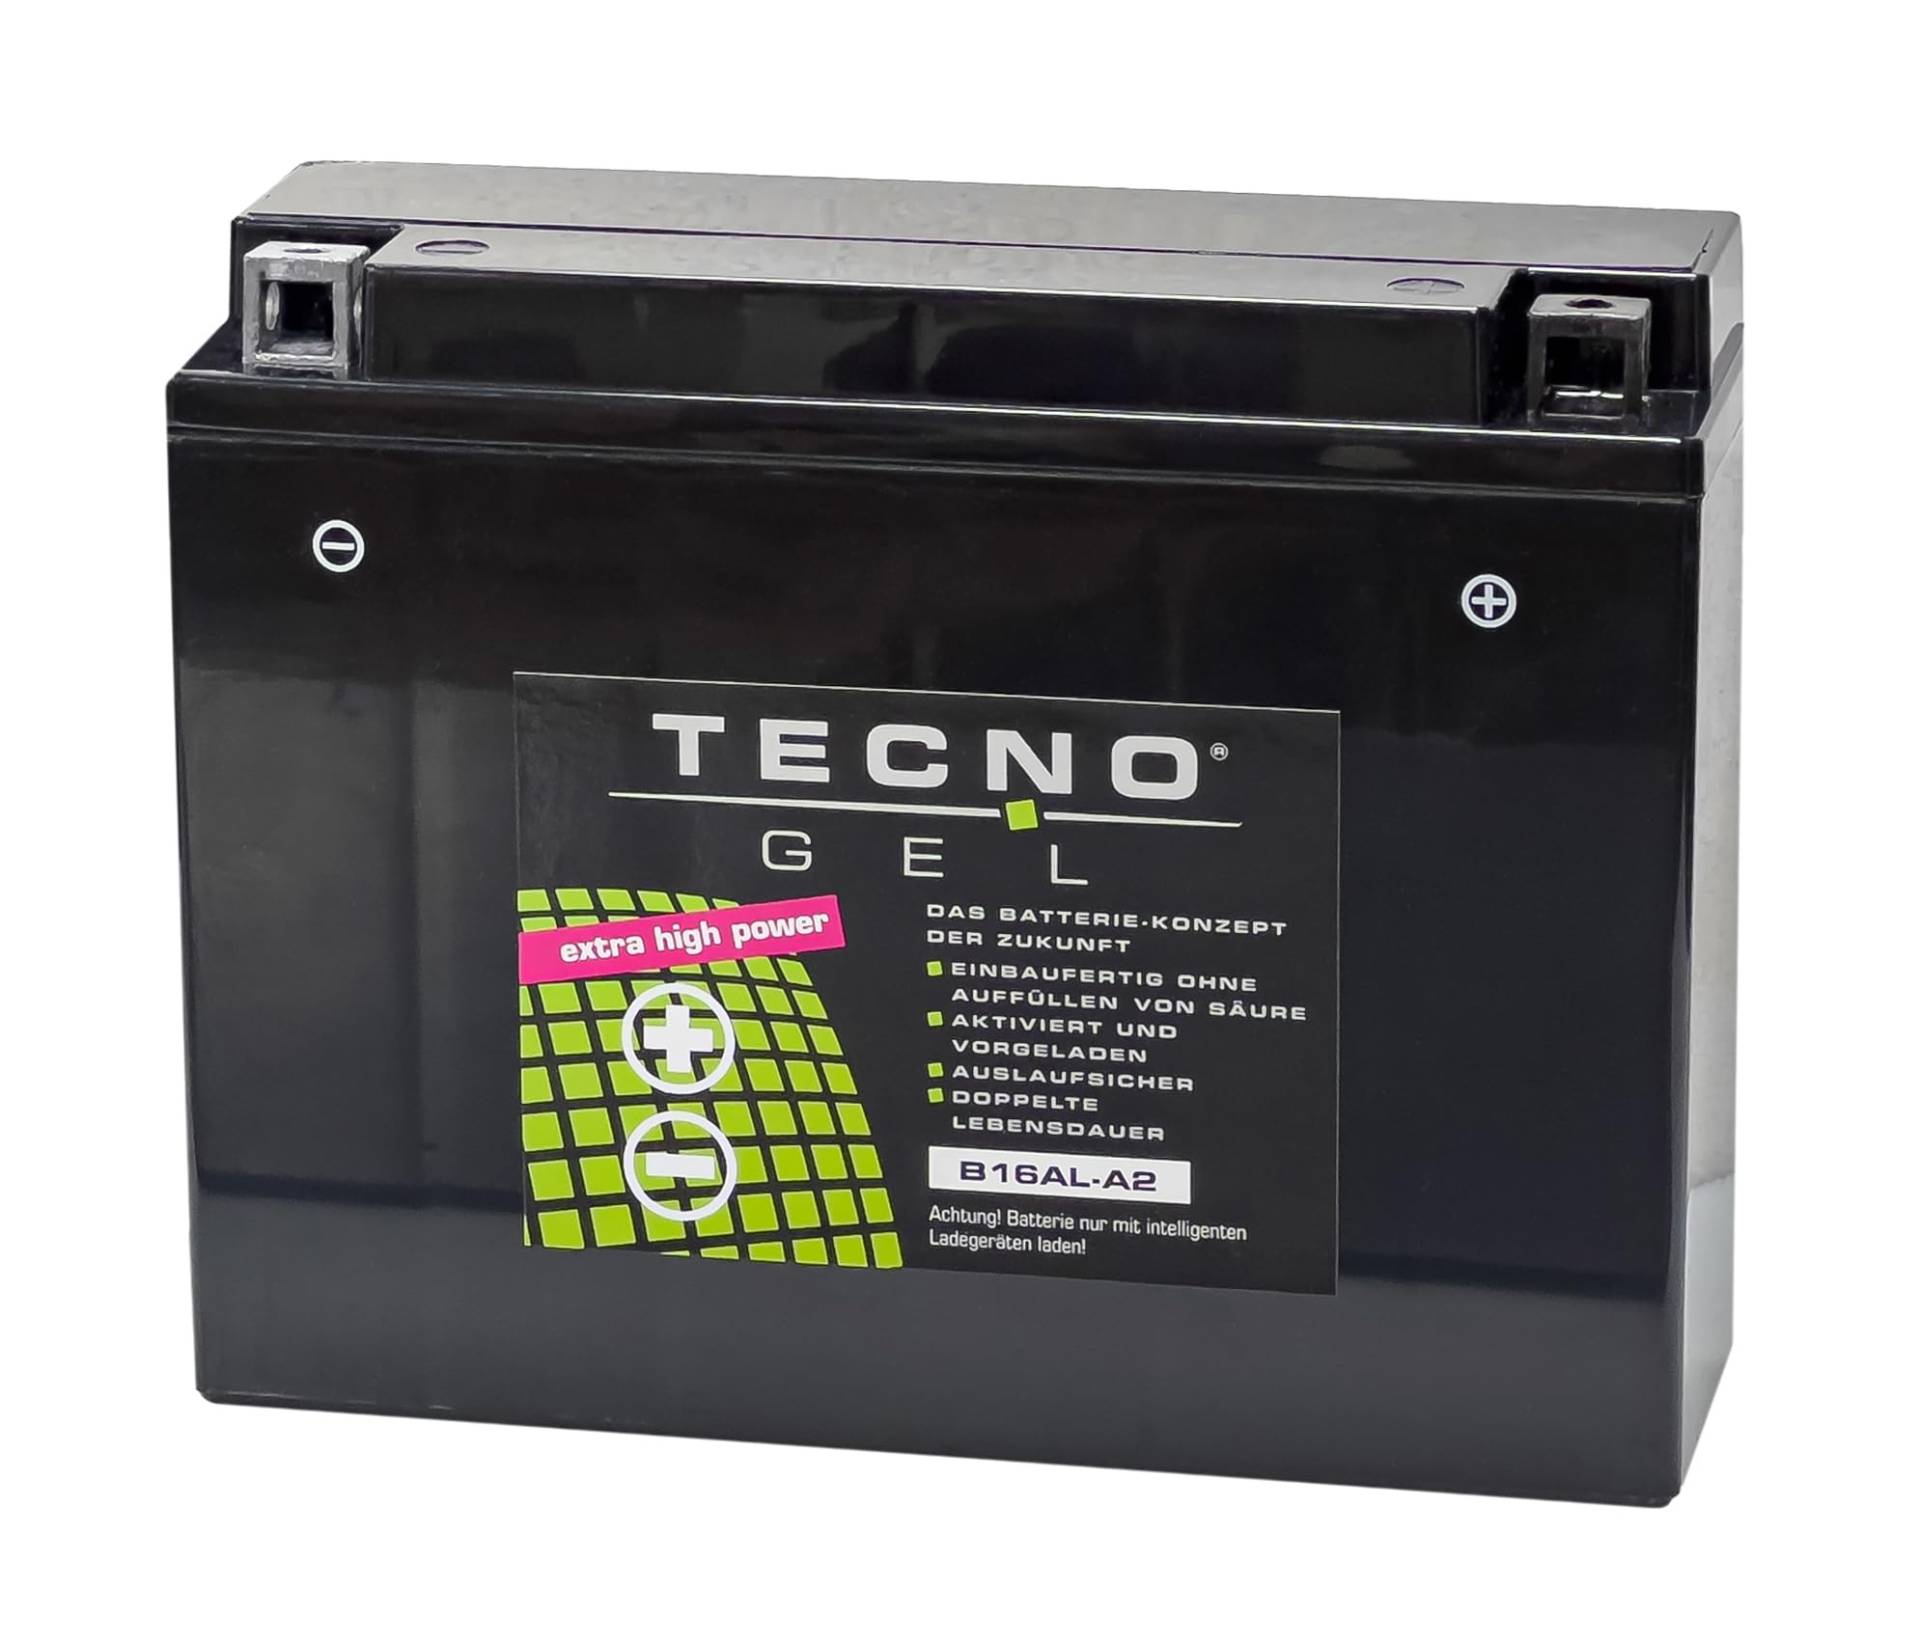 TECNO-GEL Motorrad-Batterie für YB16AL-A2 für DUCATI 916 alle 1994-2000, 12V Gel-Batterie 16Ah, 205x70x162 mm von Wirth-Federn